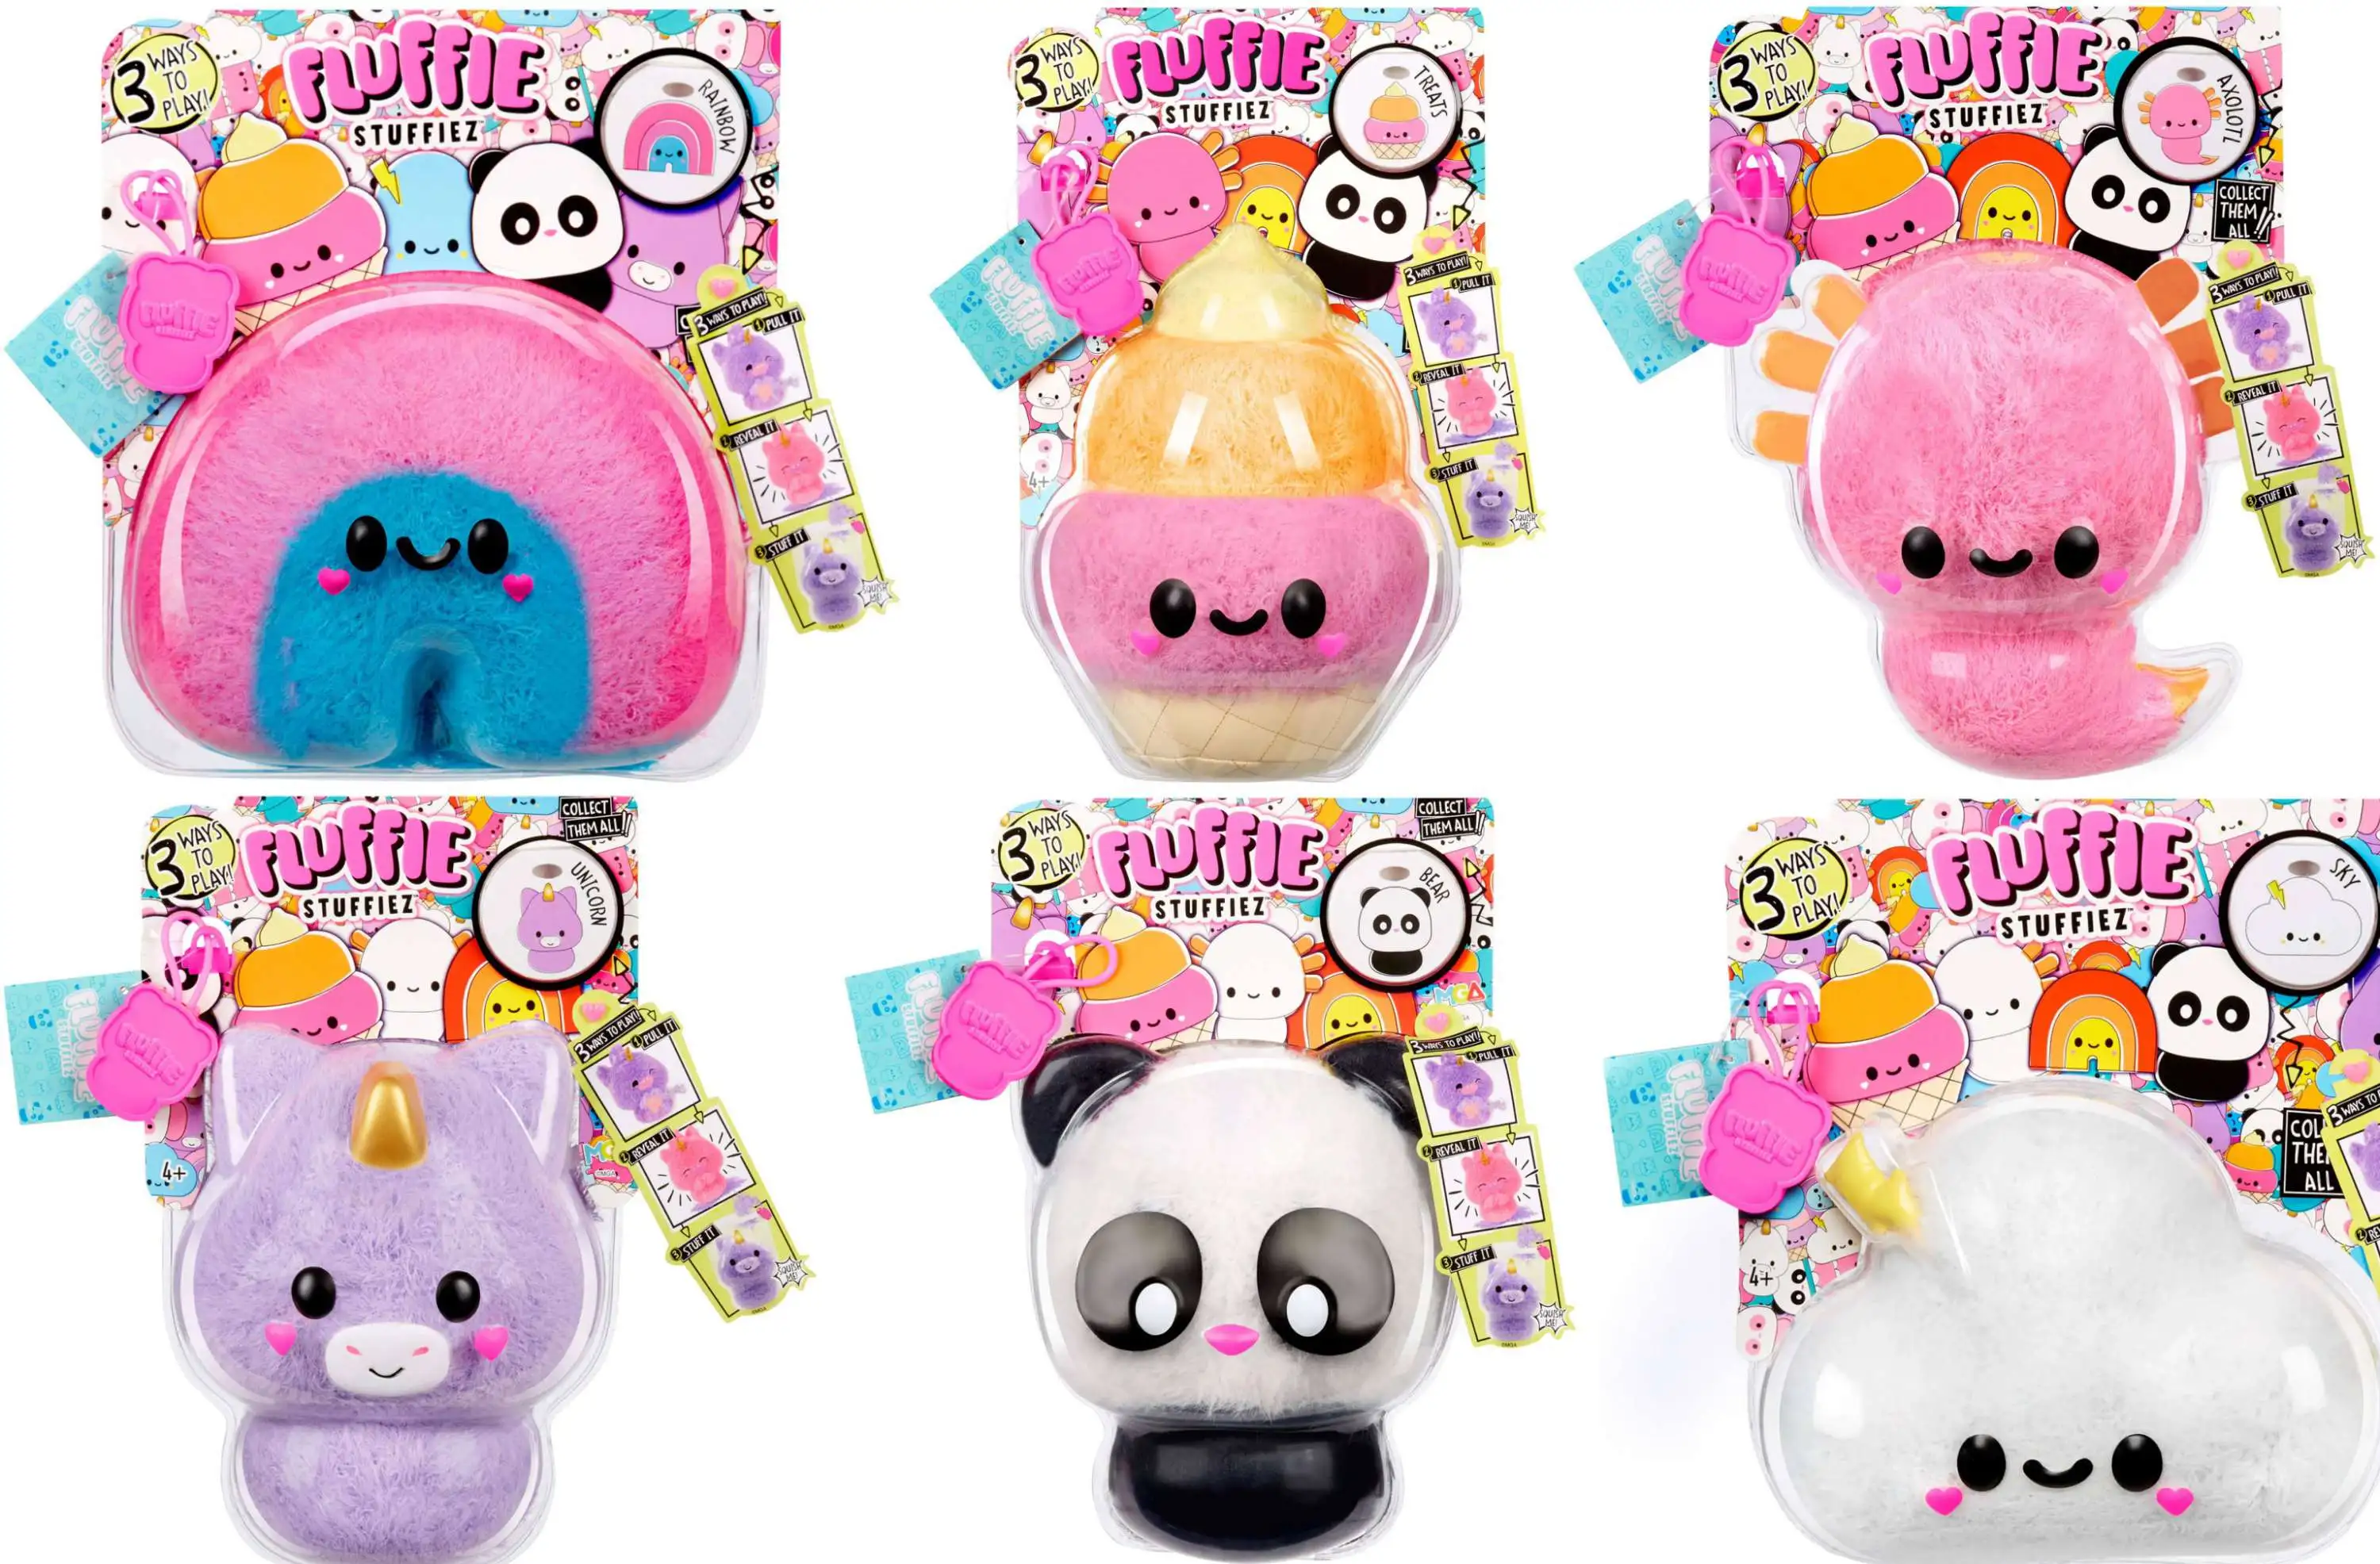 Buy Fluffie Stuffiez Small Rainbow Plush, Teddy bears and soft toys